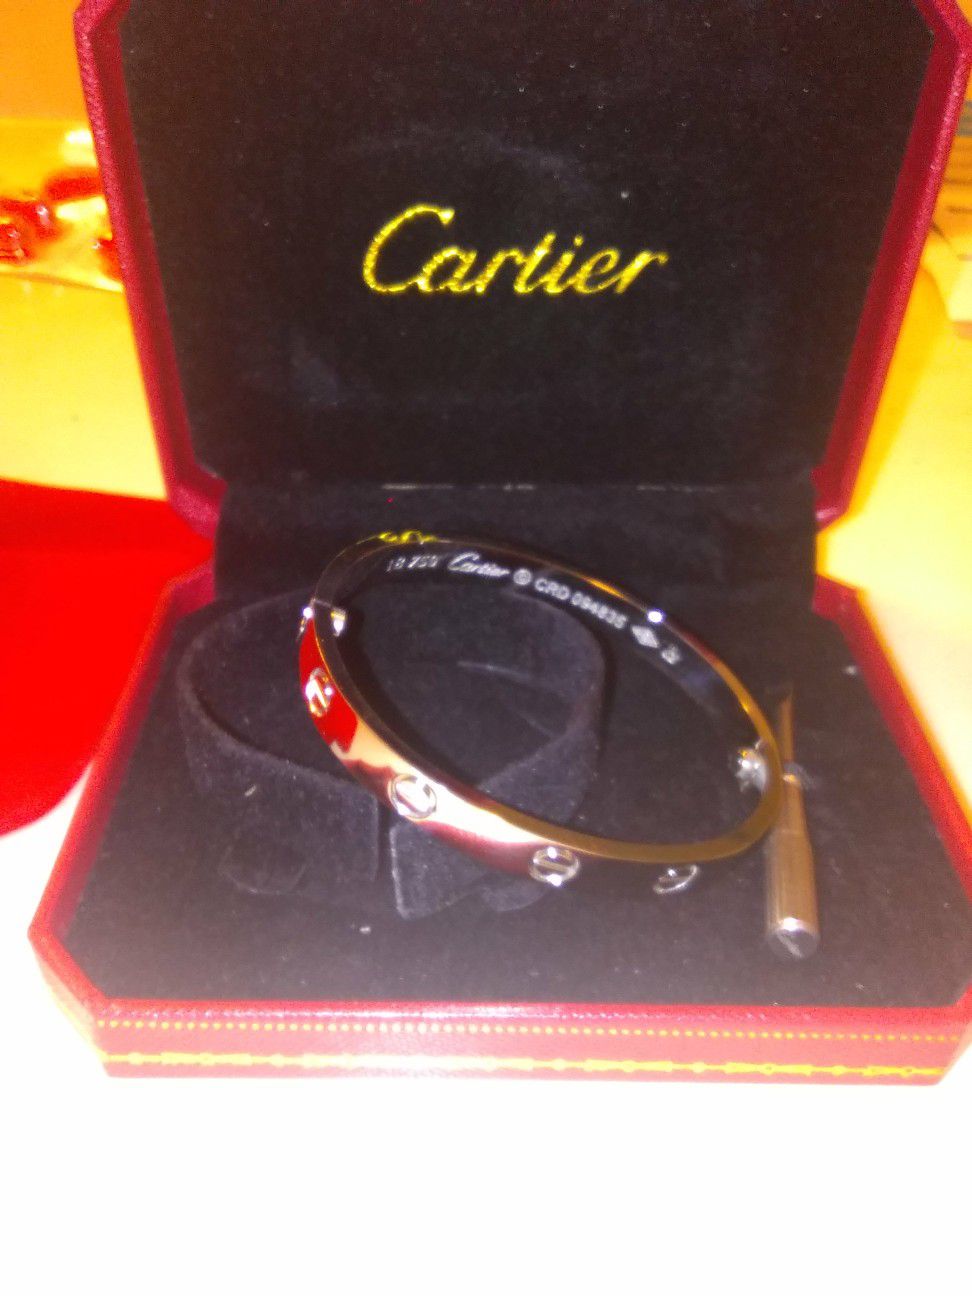 Cartier love bracelet (gold or silver)